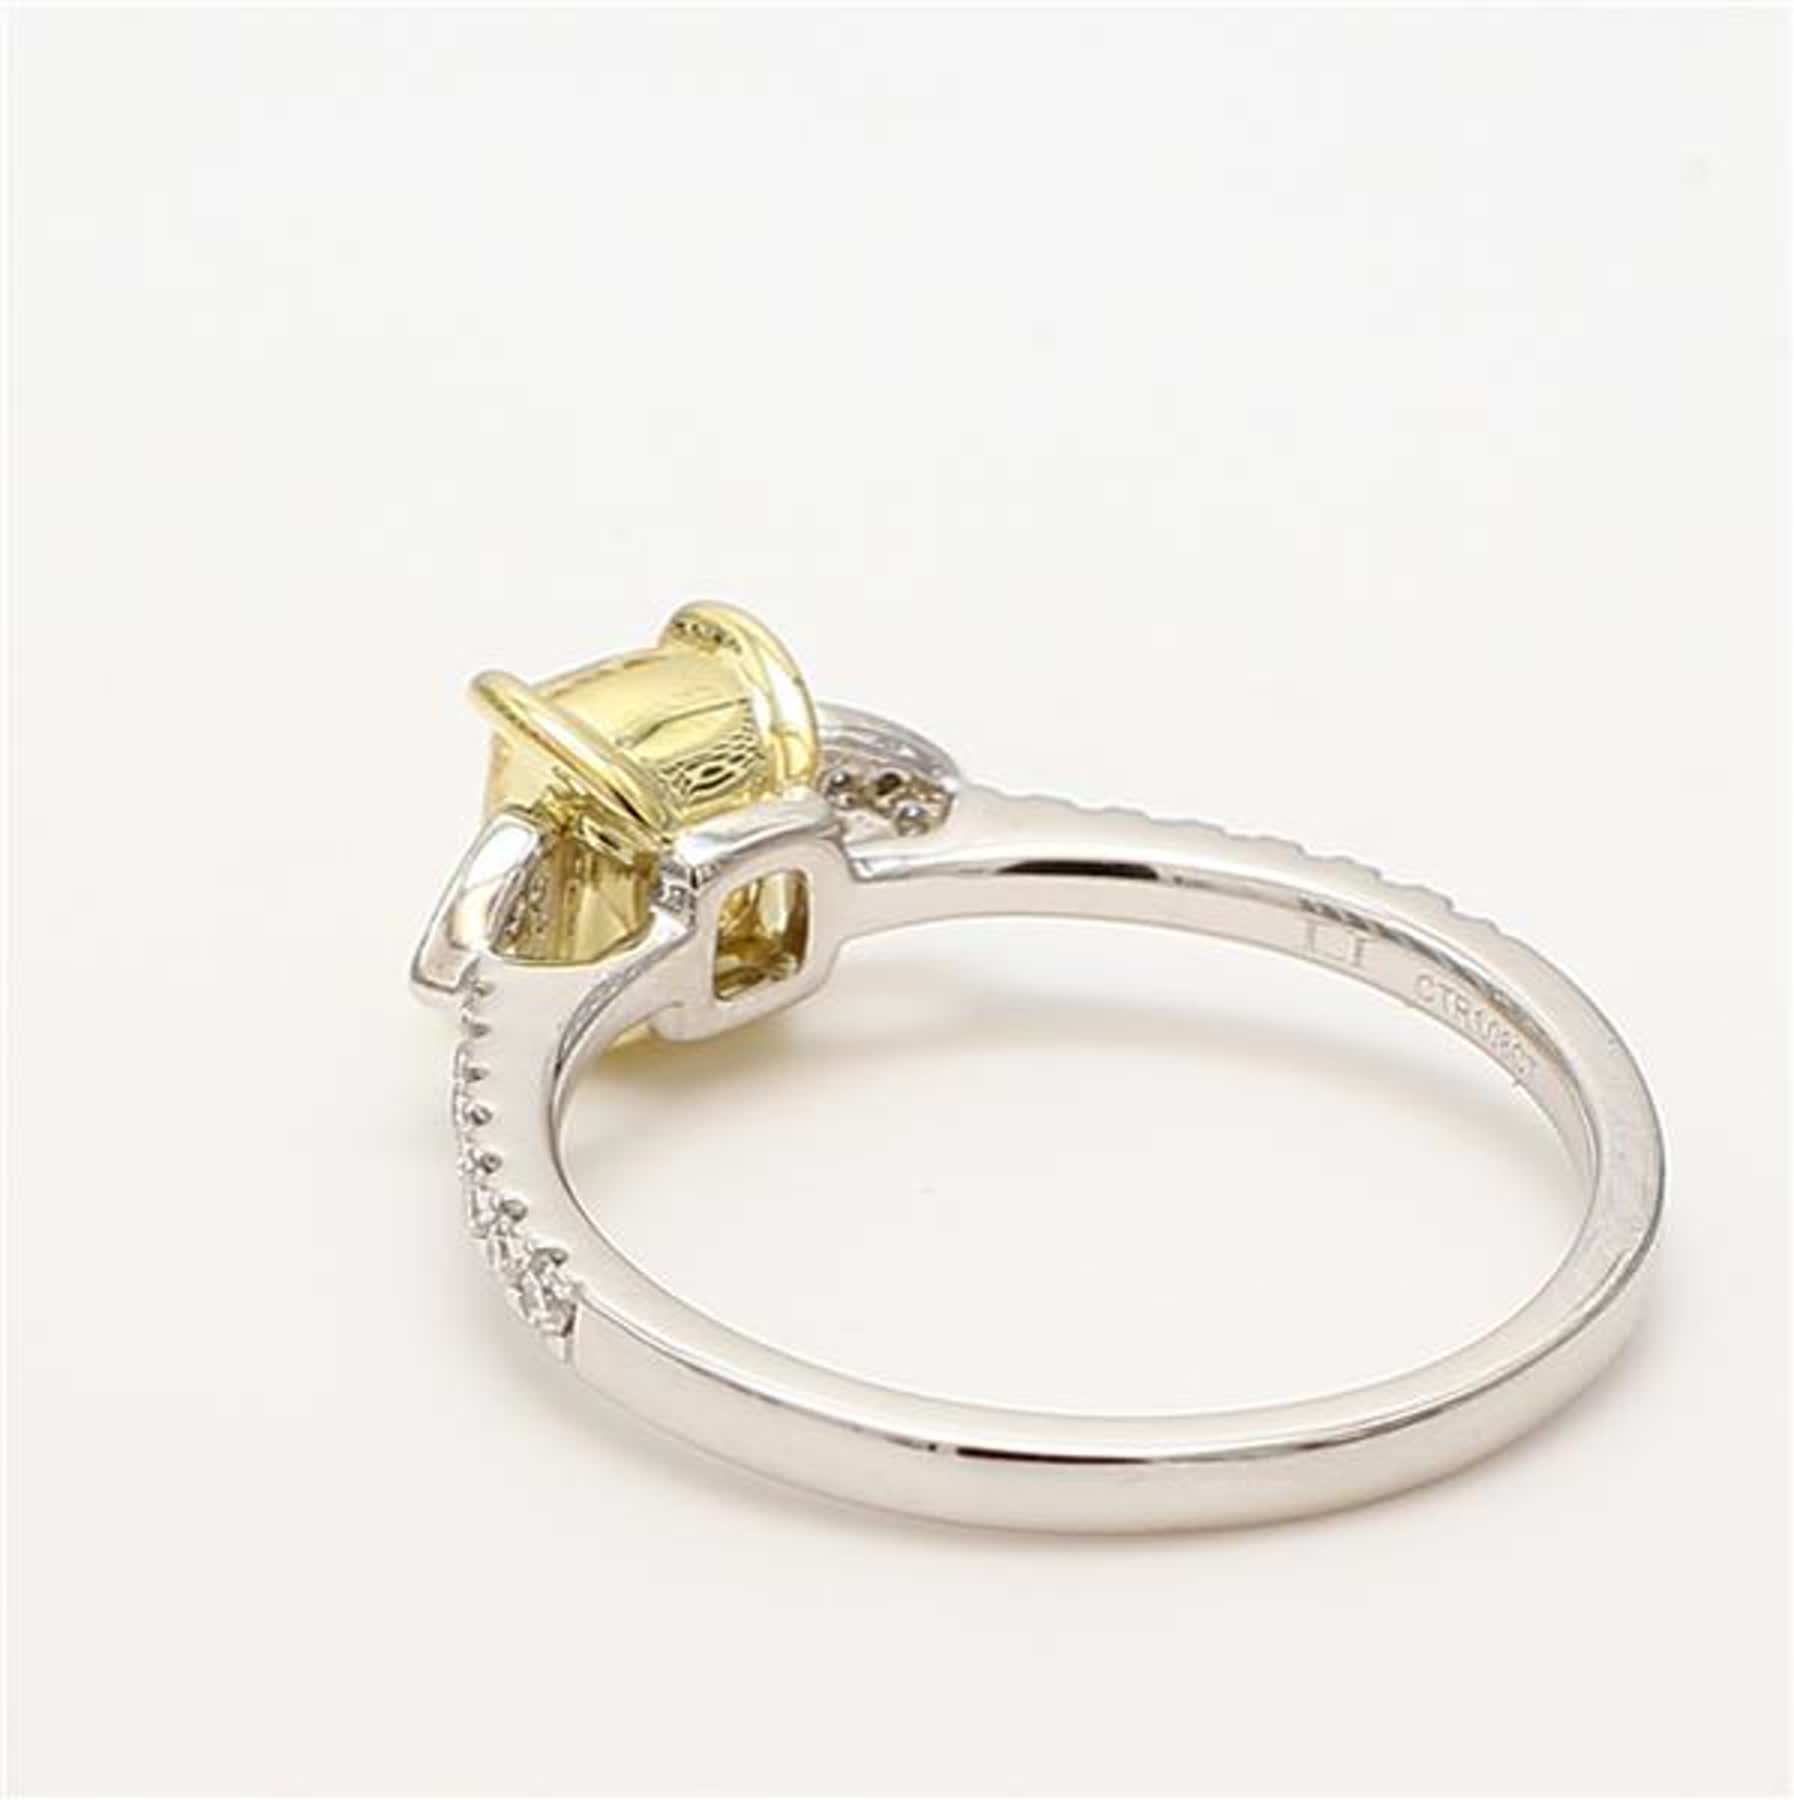 GIA Certified Natural Yellow Cushion and White Diamond 1.29 Carat TW Plat Ring